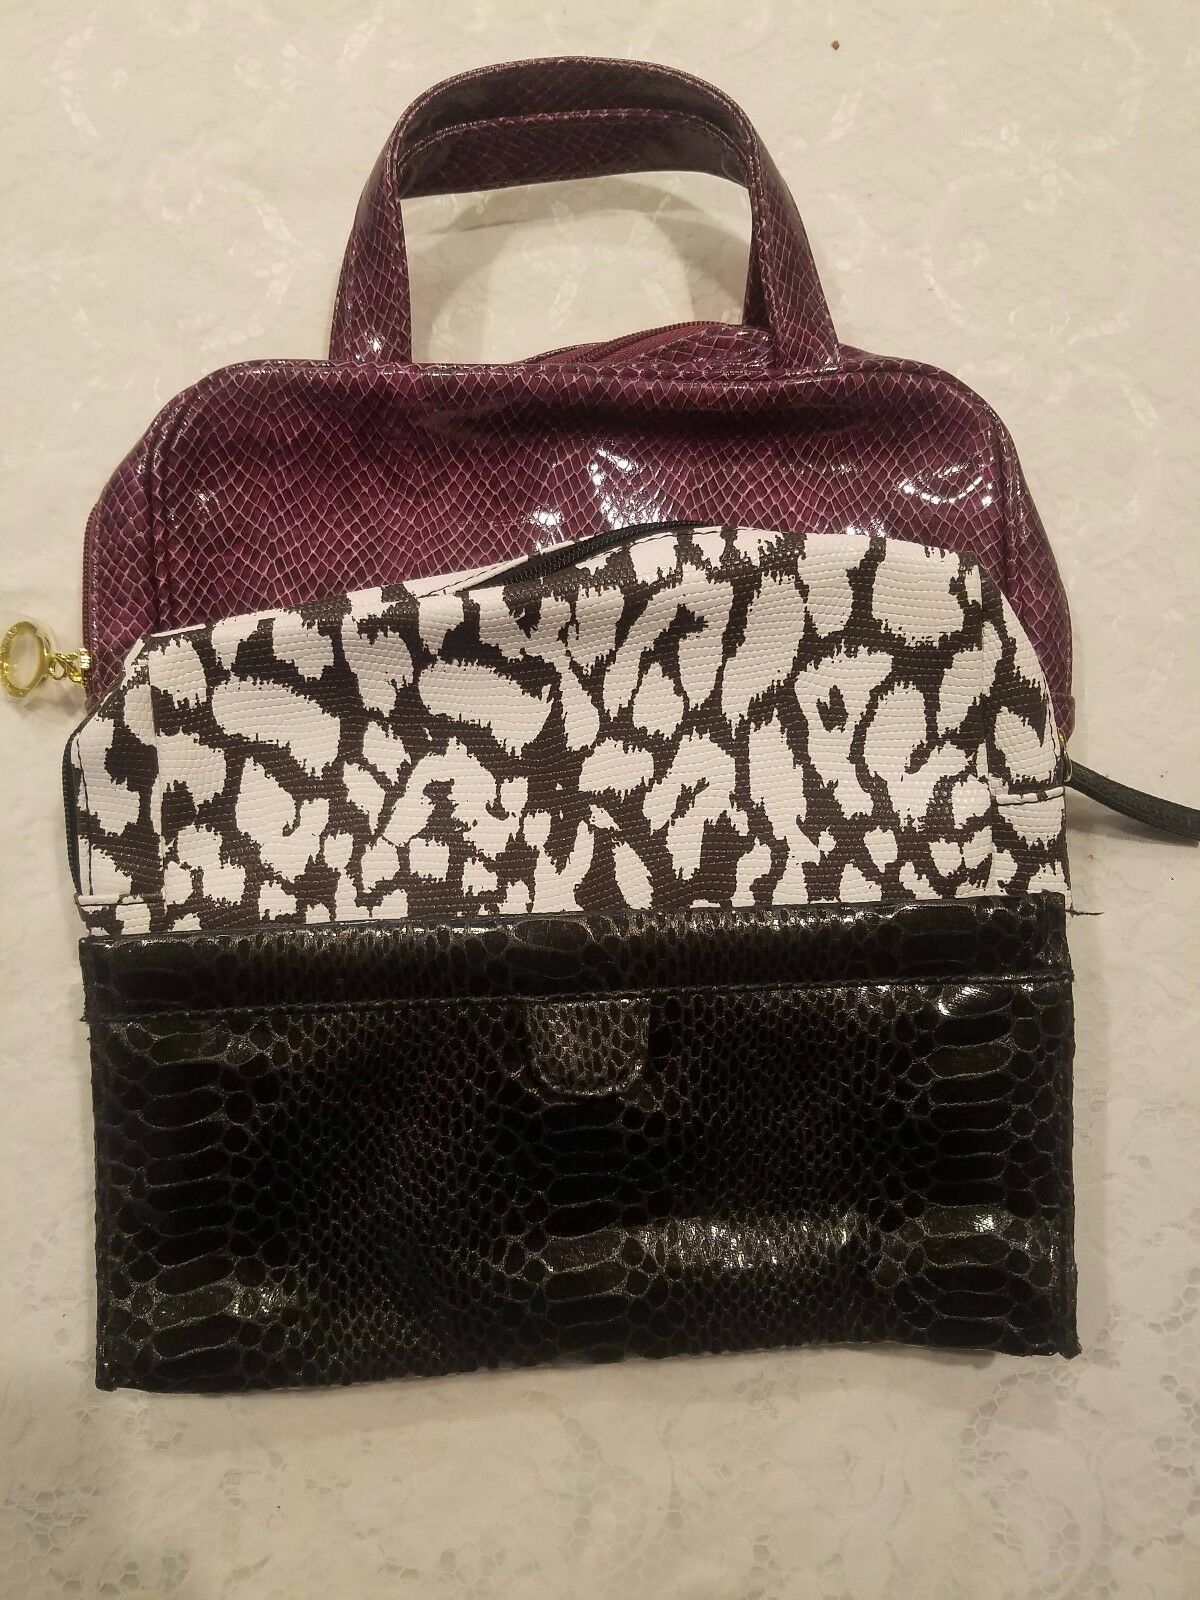 Elegant and Classy Set of 3 Hand Bag/POUCH/PURSE Estee Lauder - $1.97